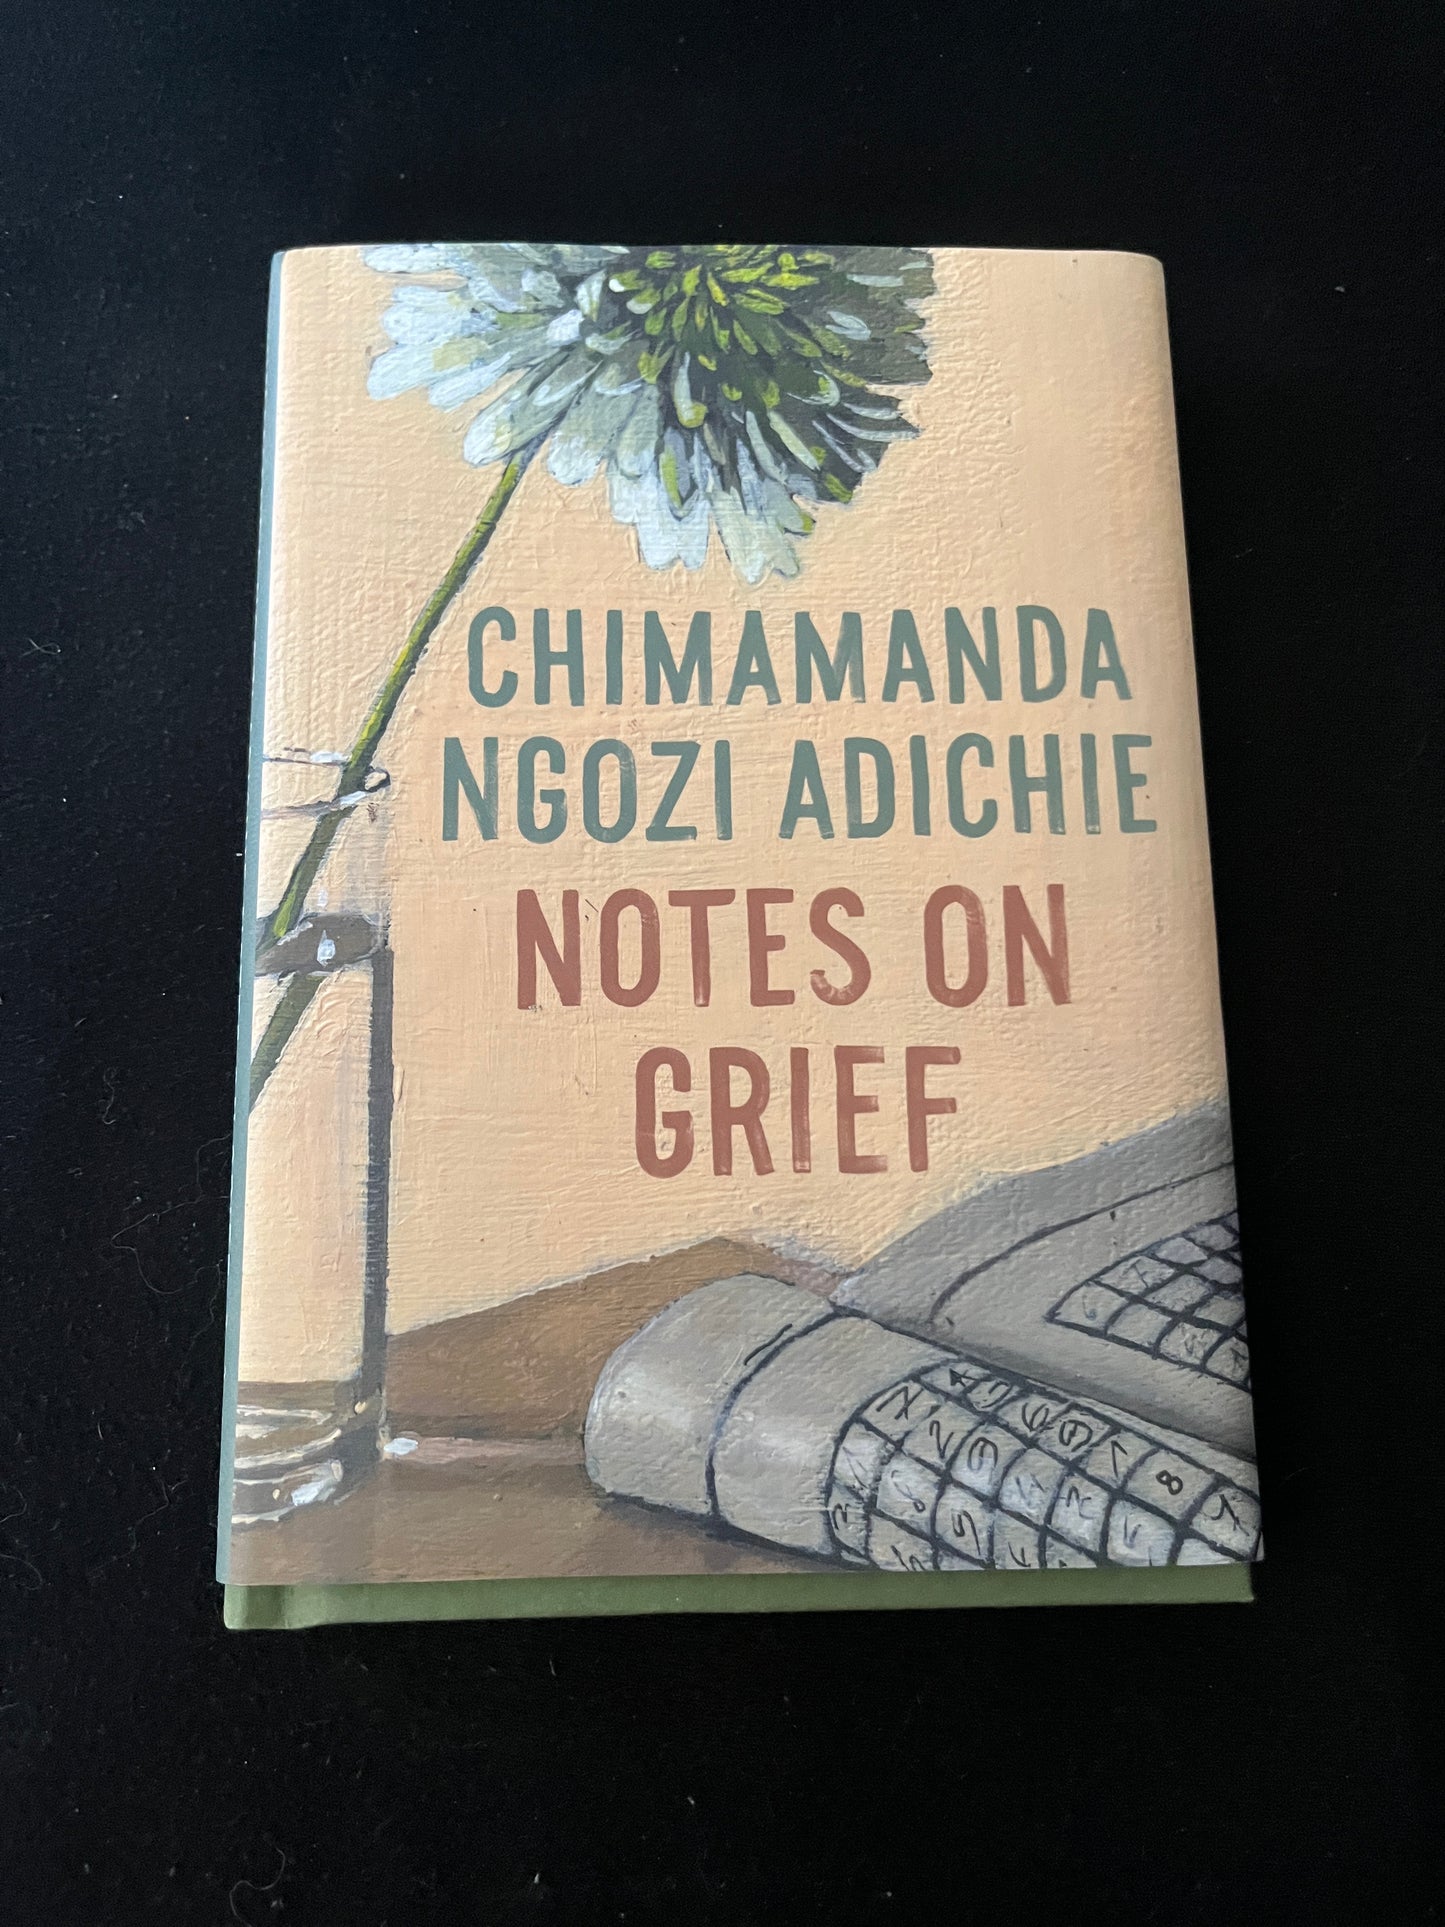 NOTES ON GRIEF by Chimamanda Ngozi Adichie